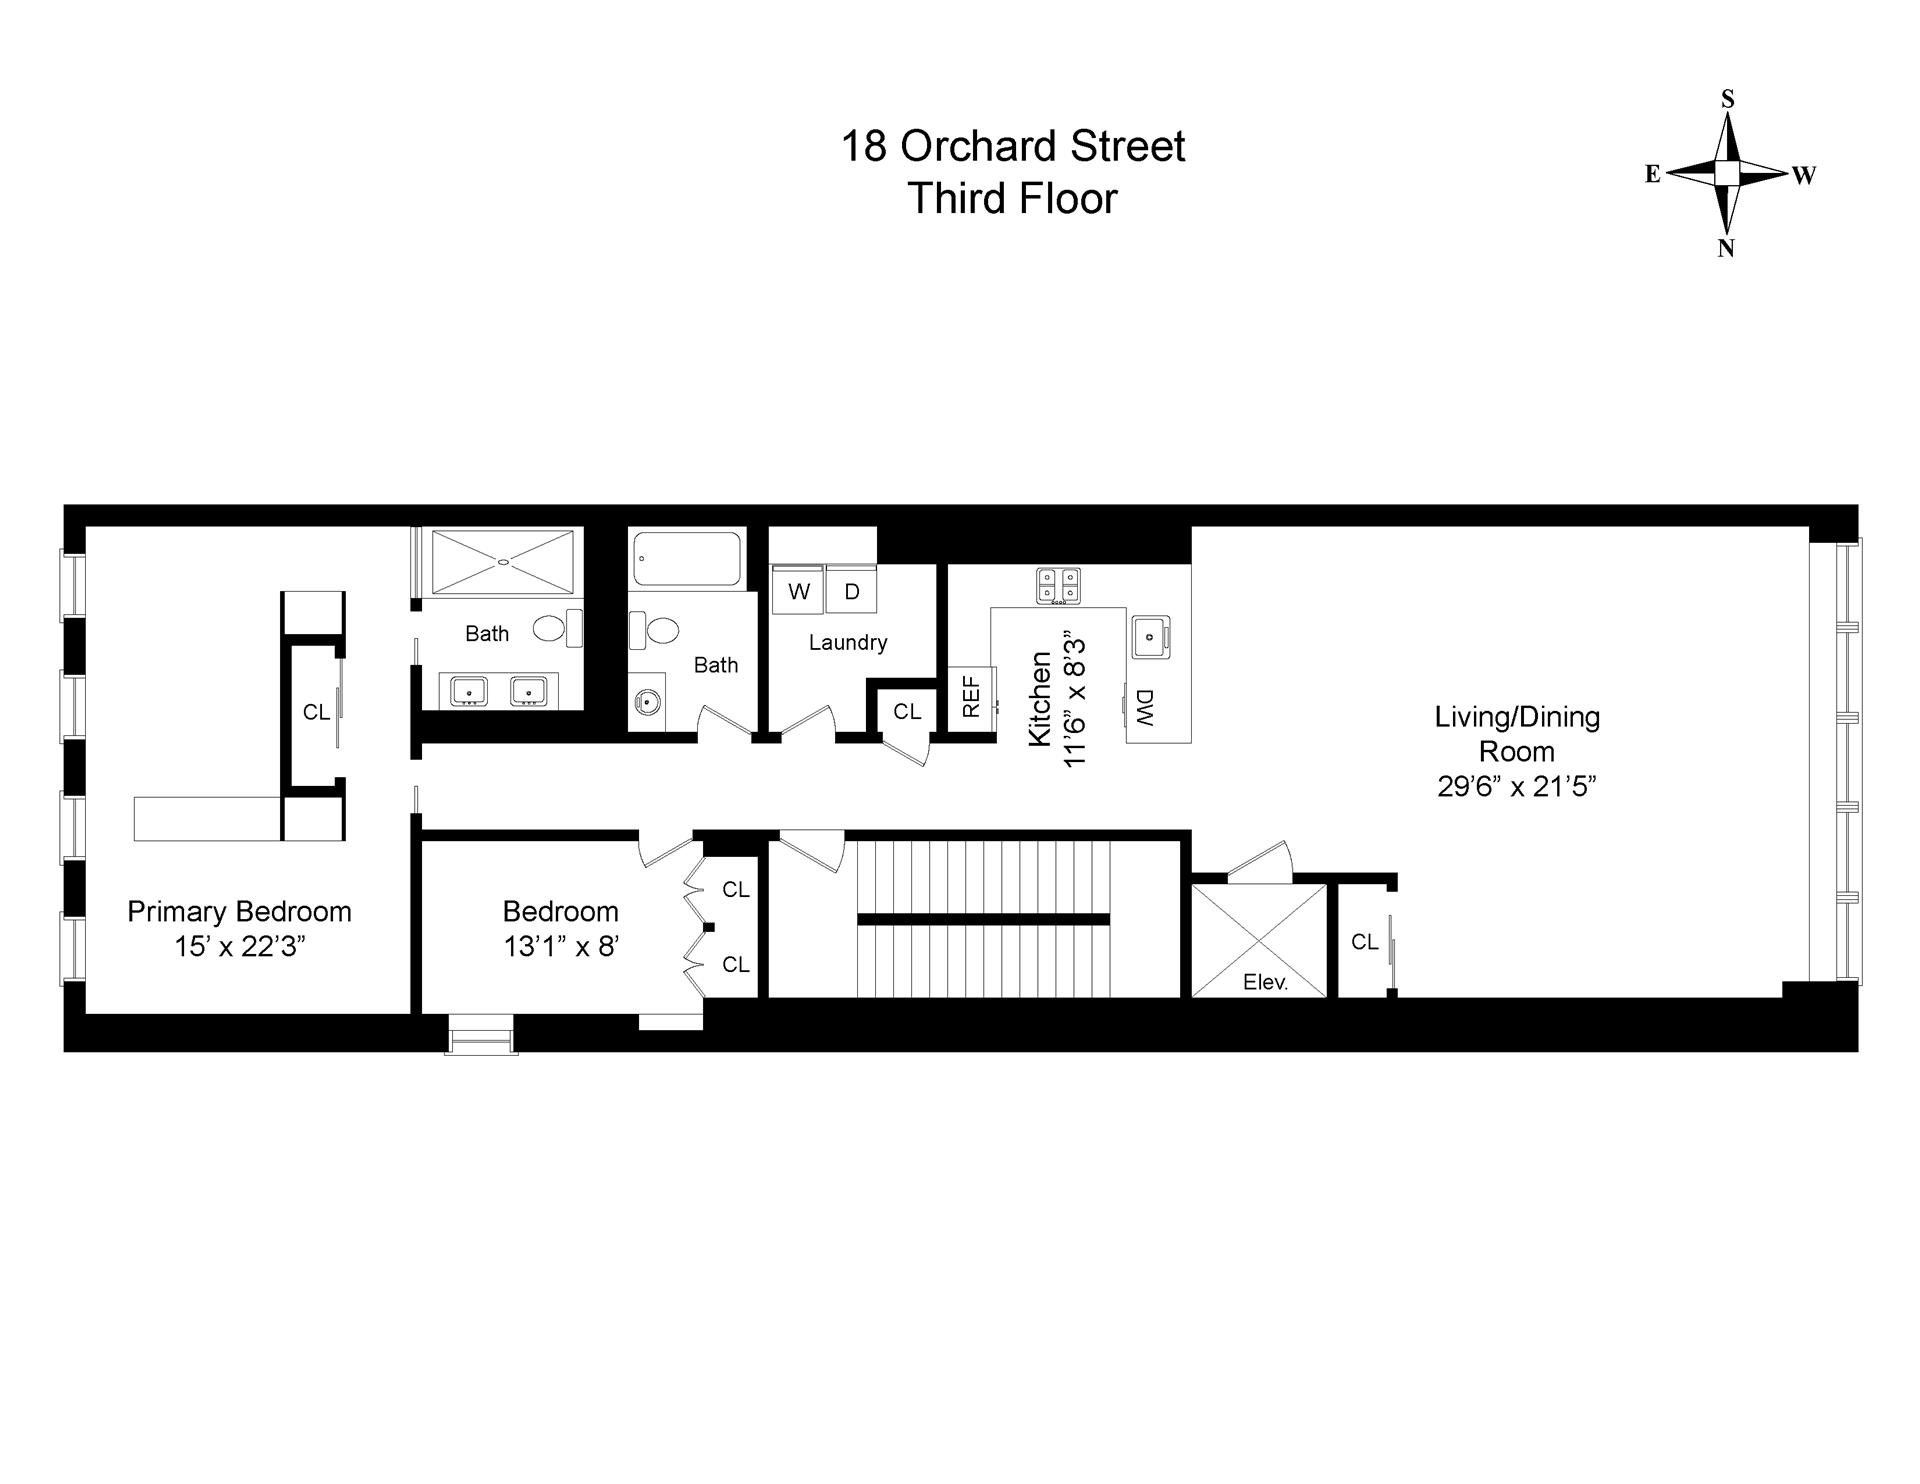 Floorplan for 18 Orchard Street, 3